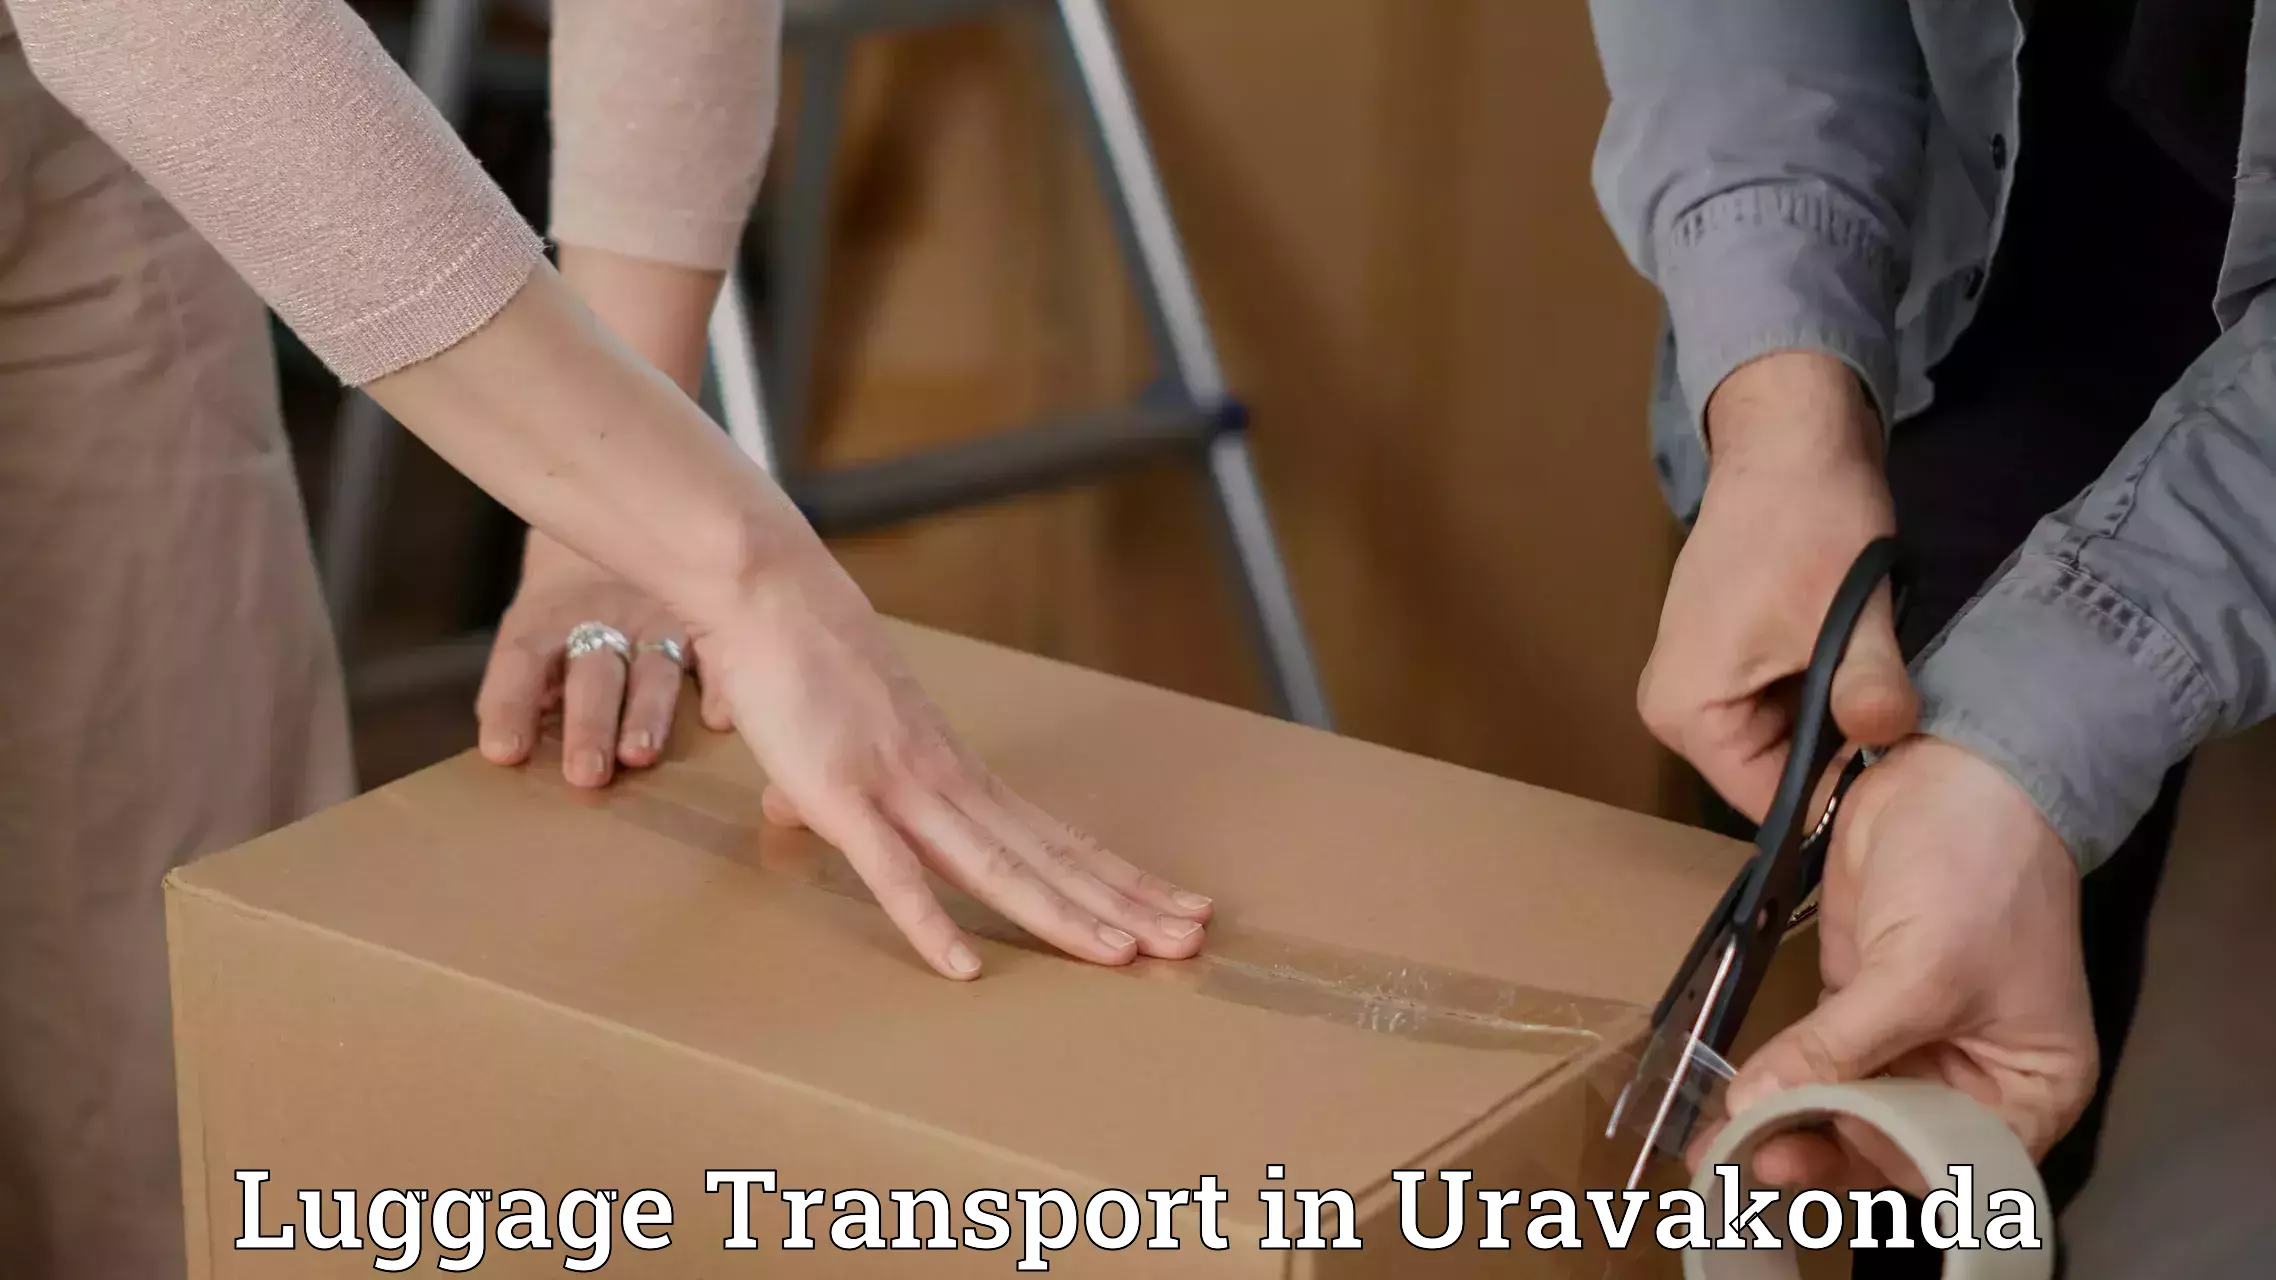 Automated luggage transport in Uravakonda